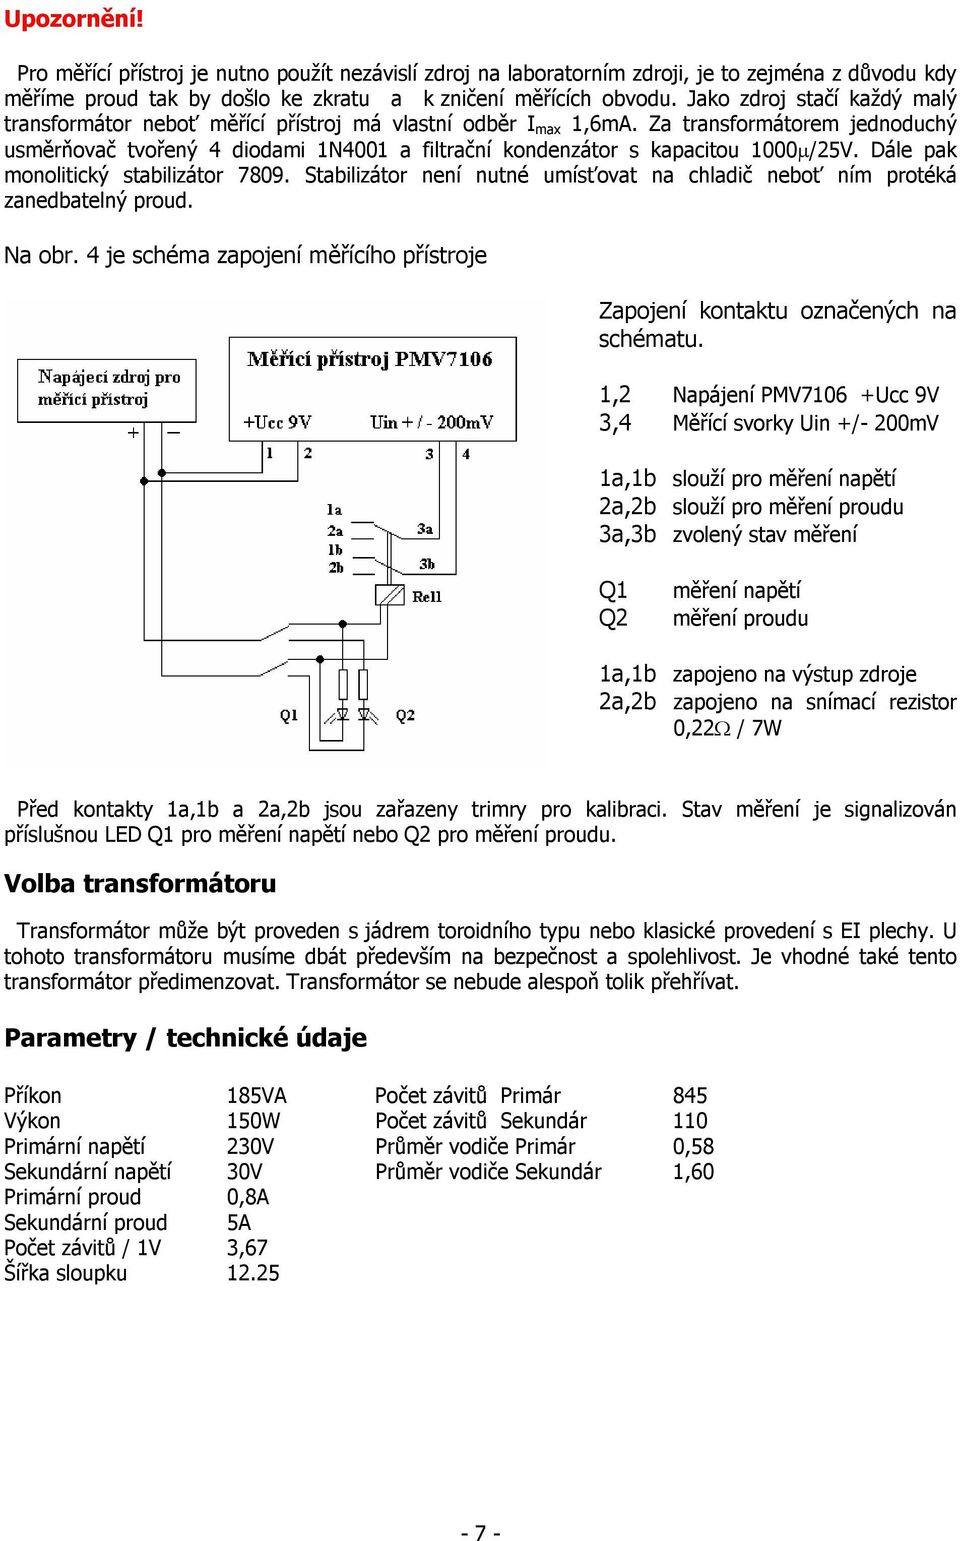 Za transformátorem jednoduchý usměrňovač tvořený 4 diodami 1N4001 a filtrační kondenzátor s kapacitou 1000µ/25V. Dále pak monolitický stabilizátor 7809.